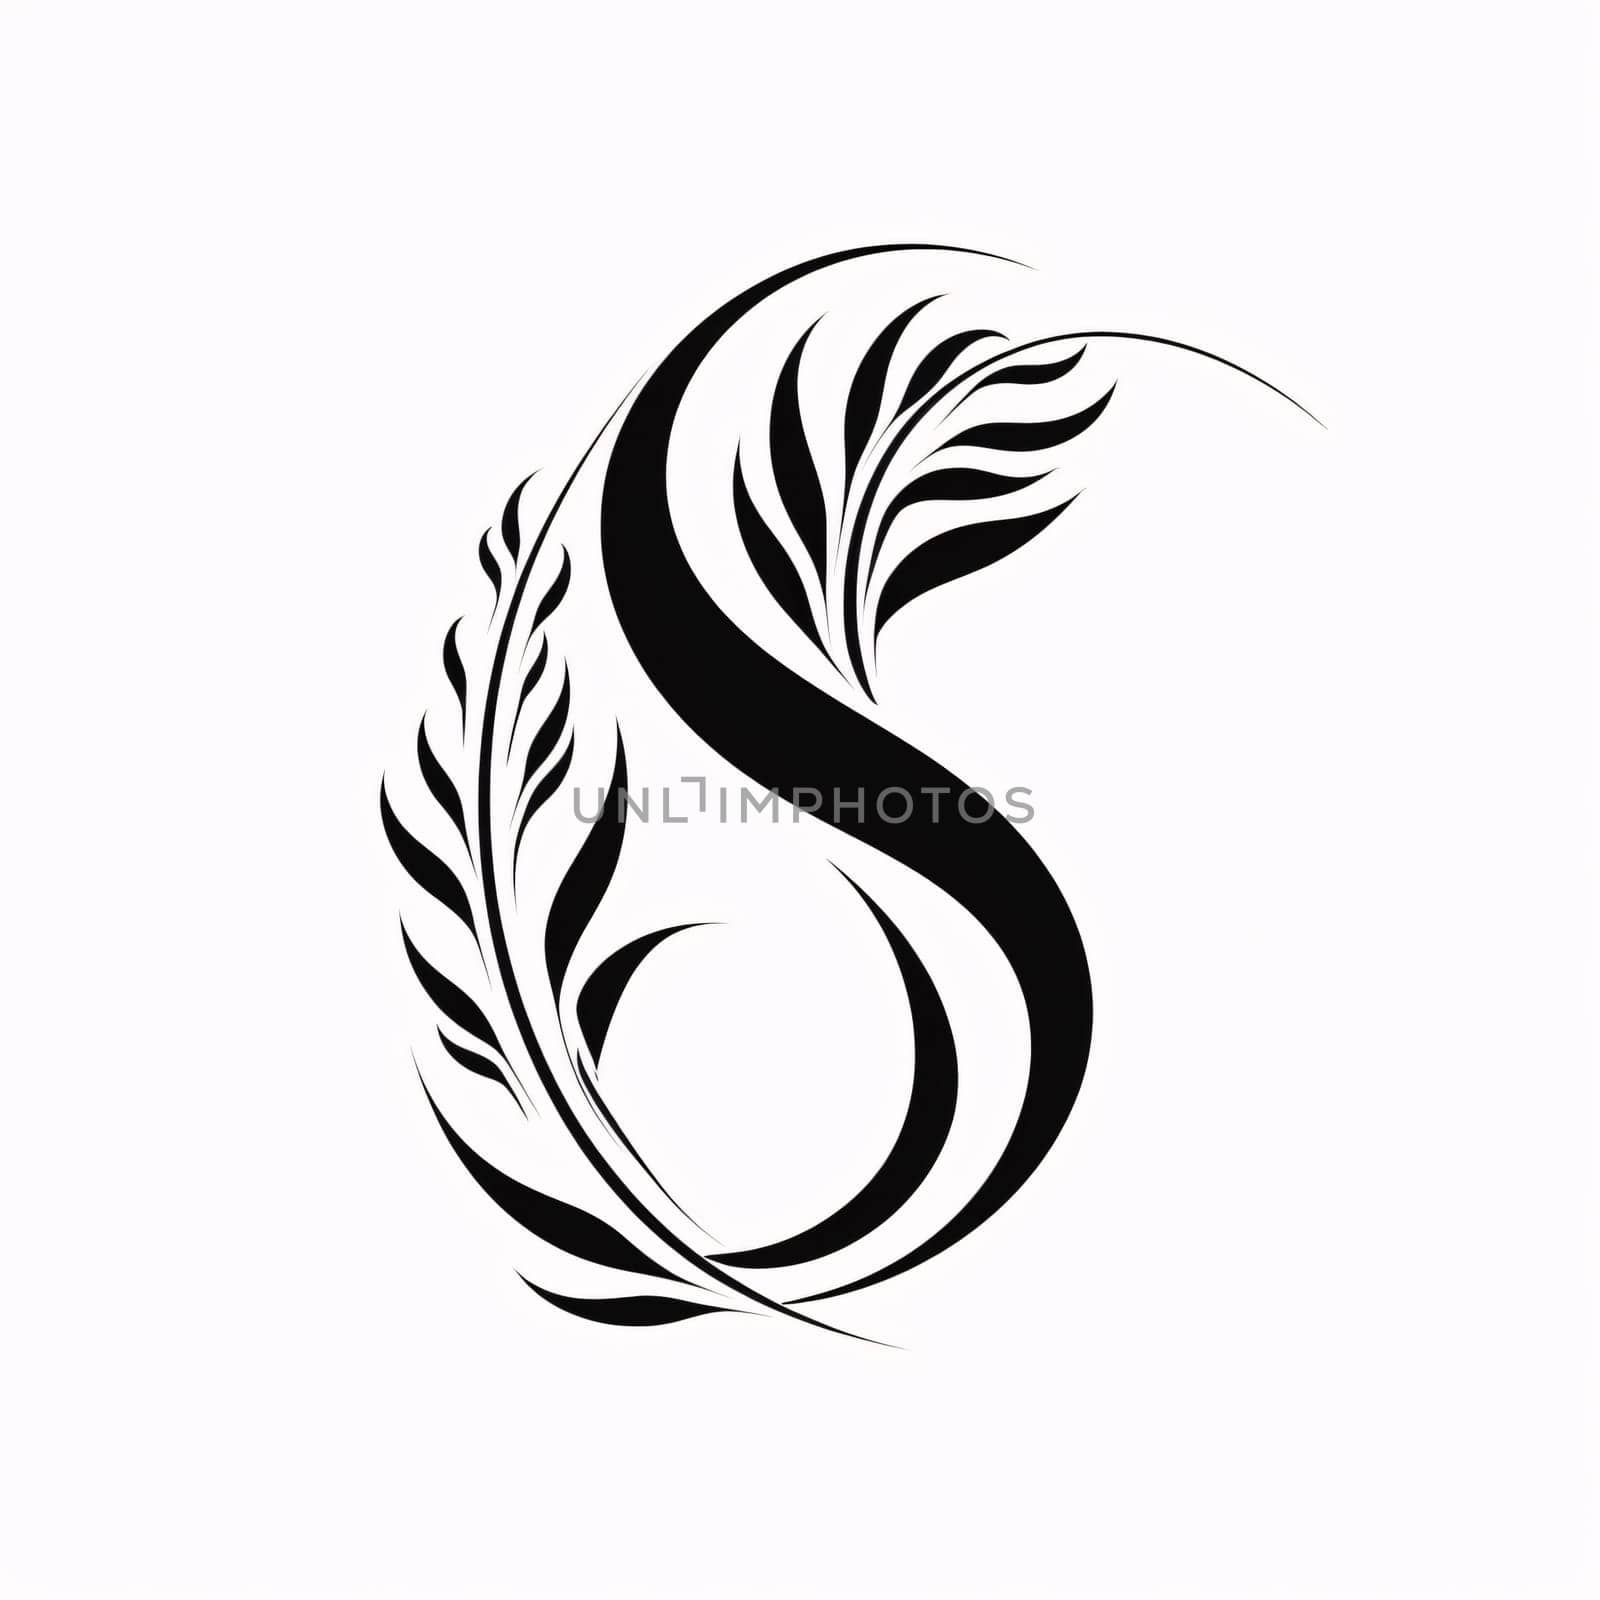 Graphic alphabet letters: letter S logo with leaf vector illustration design template black on white background